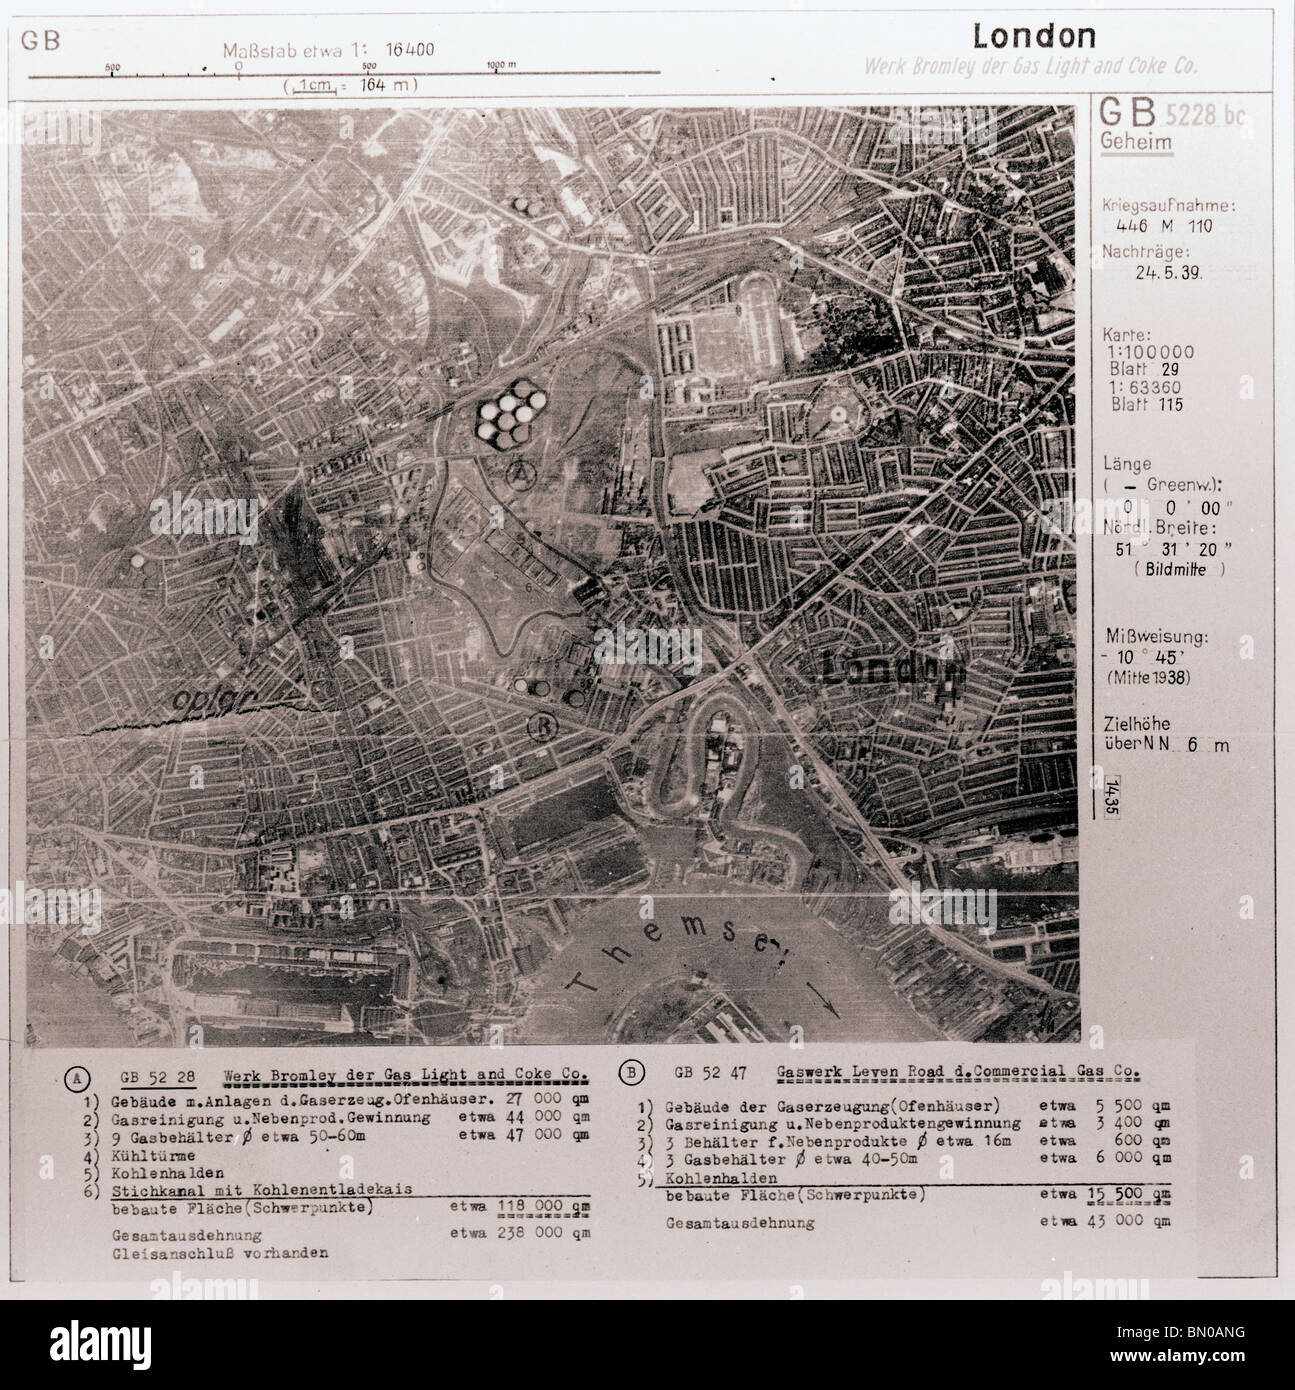 London - Poplar 1941 London Blitz Luftwaffe Aerial Image Stock Photo